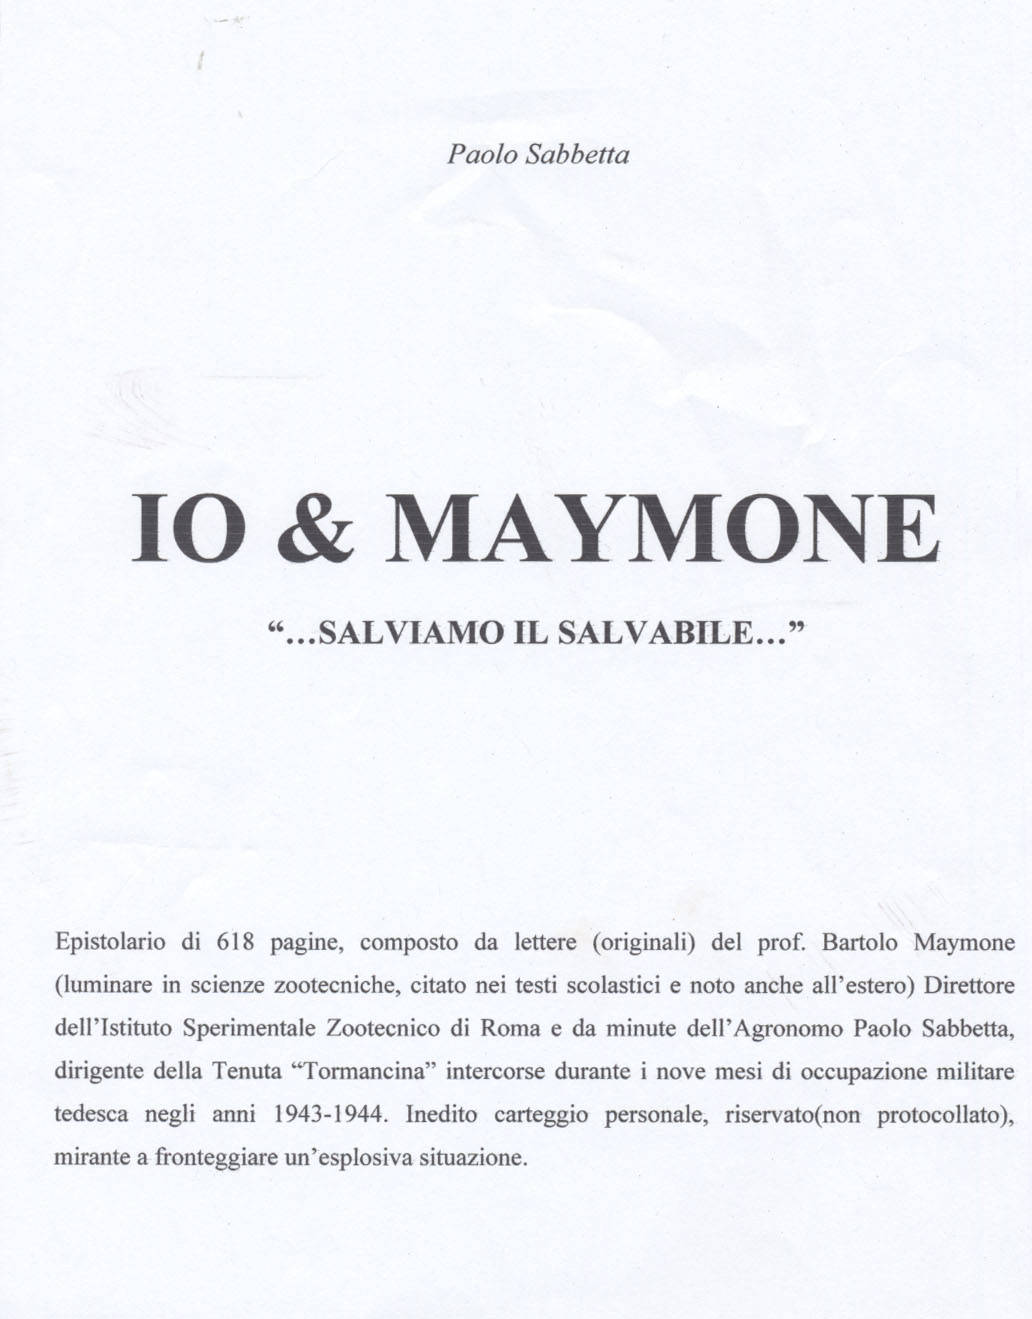 Frontespizio Memoriale-Epistolario " Io & Maymone"